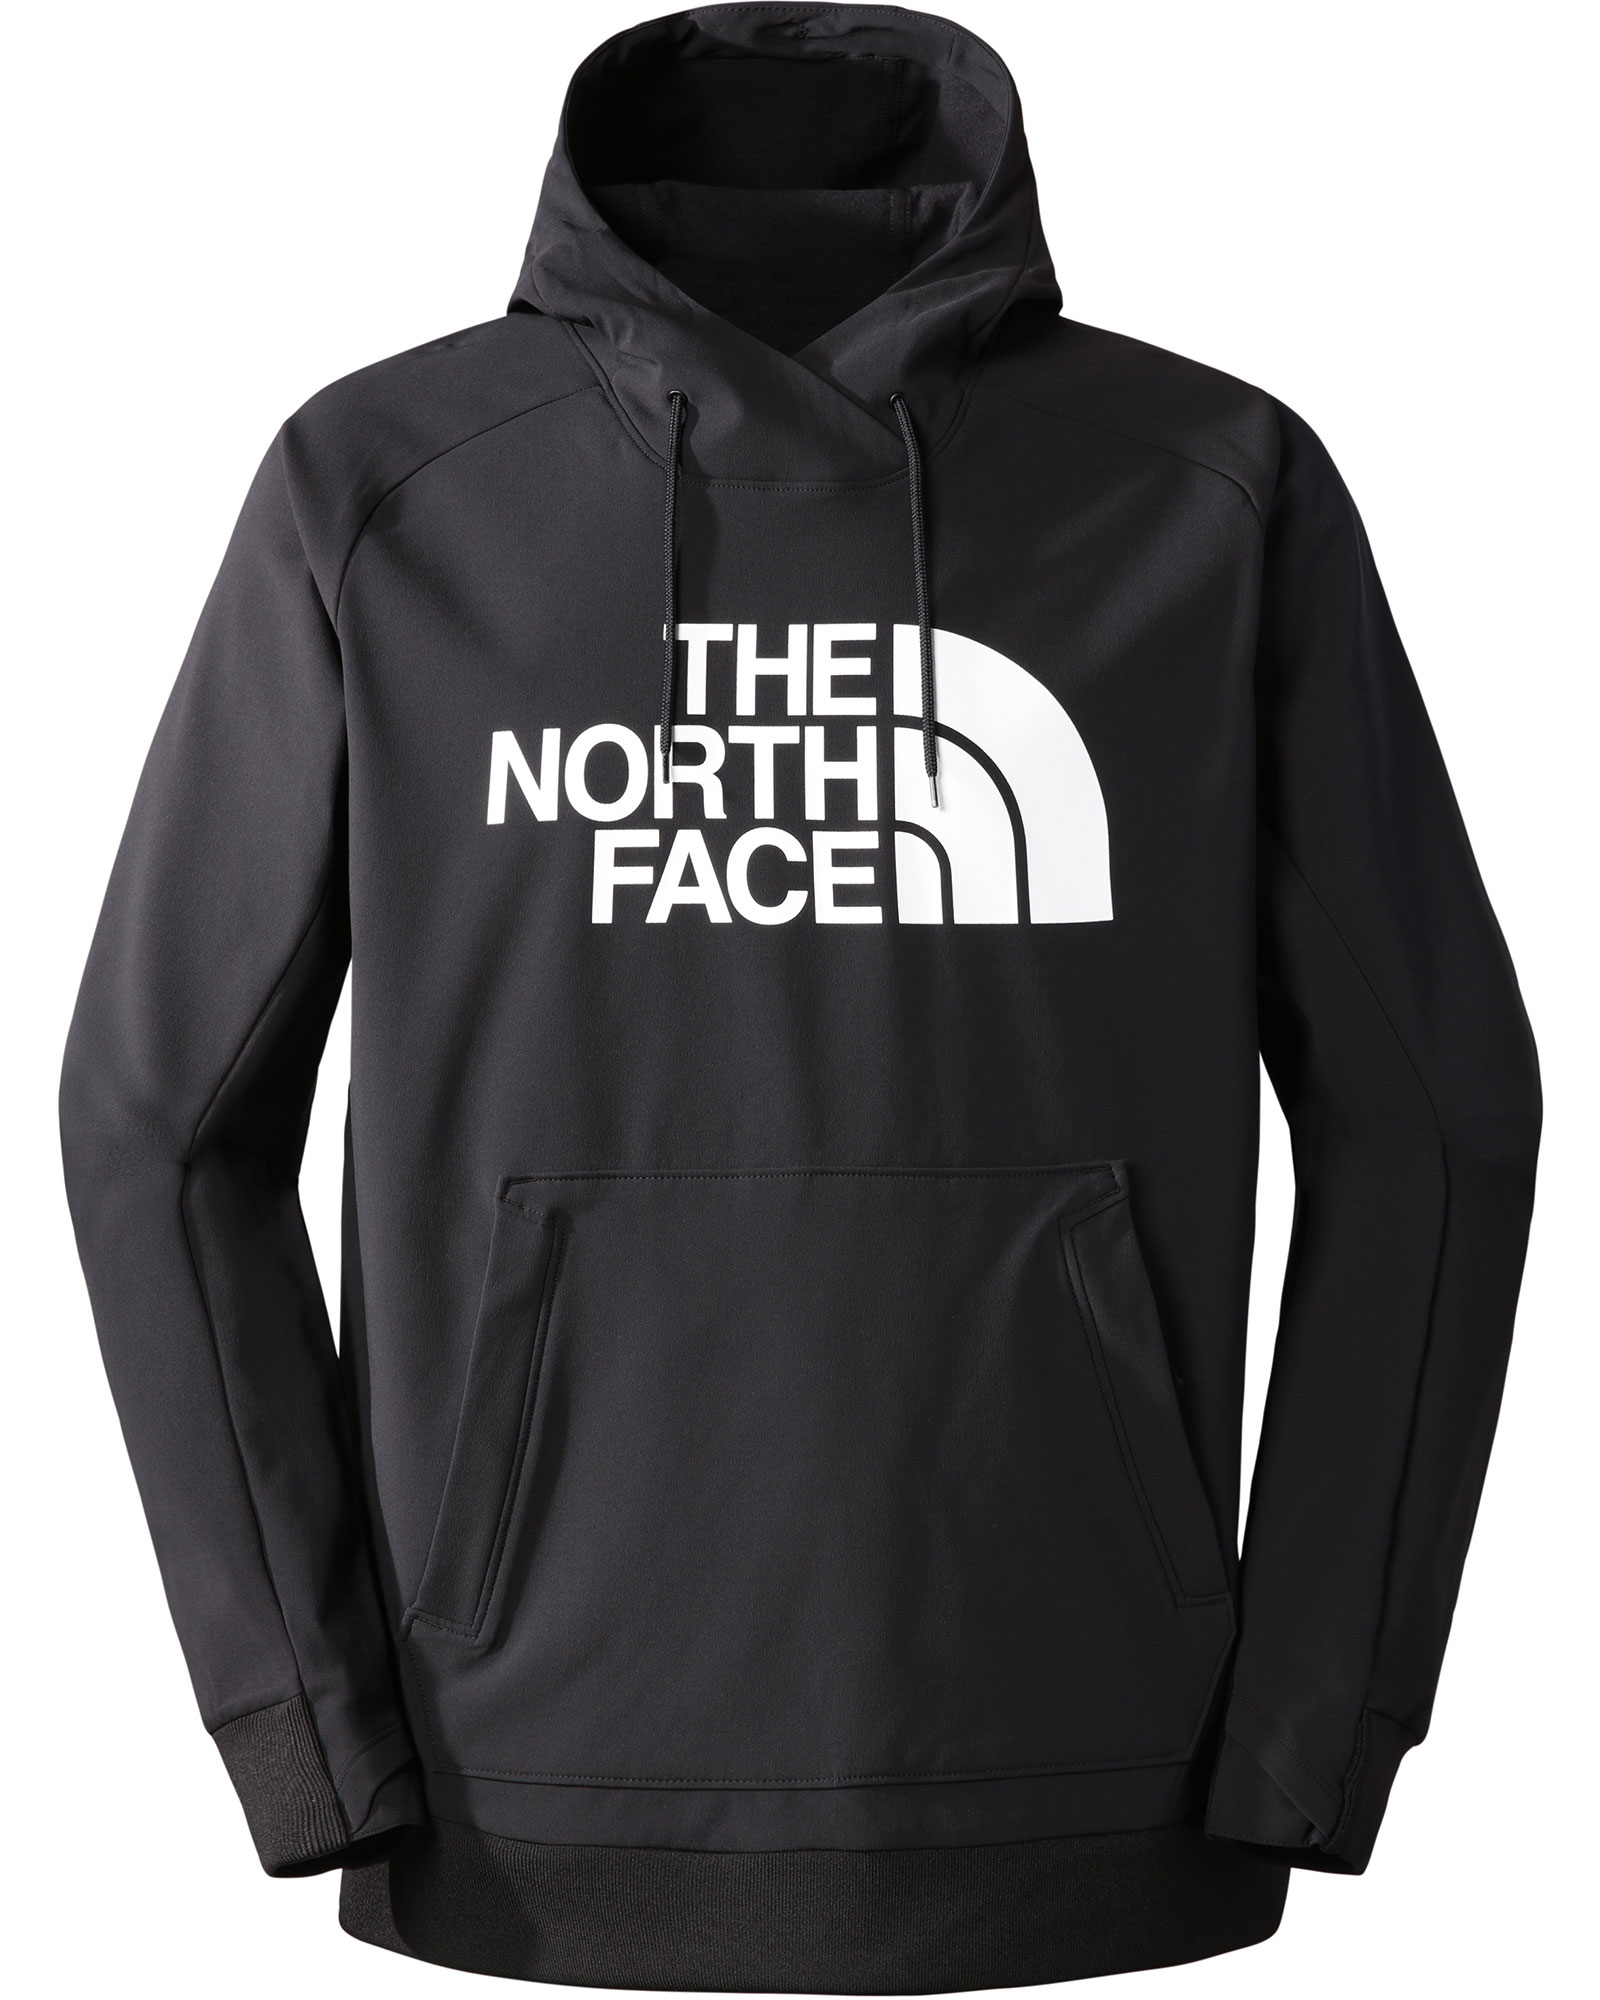 The North Face Teckno Logo Men’s Hoodie